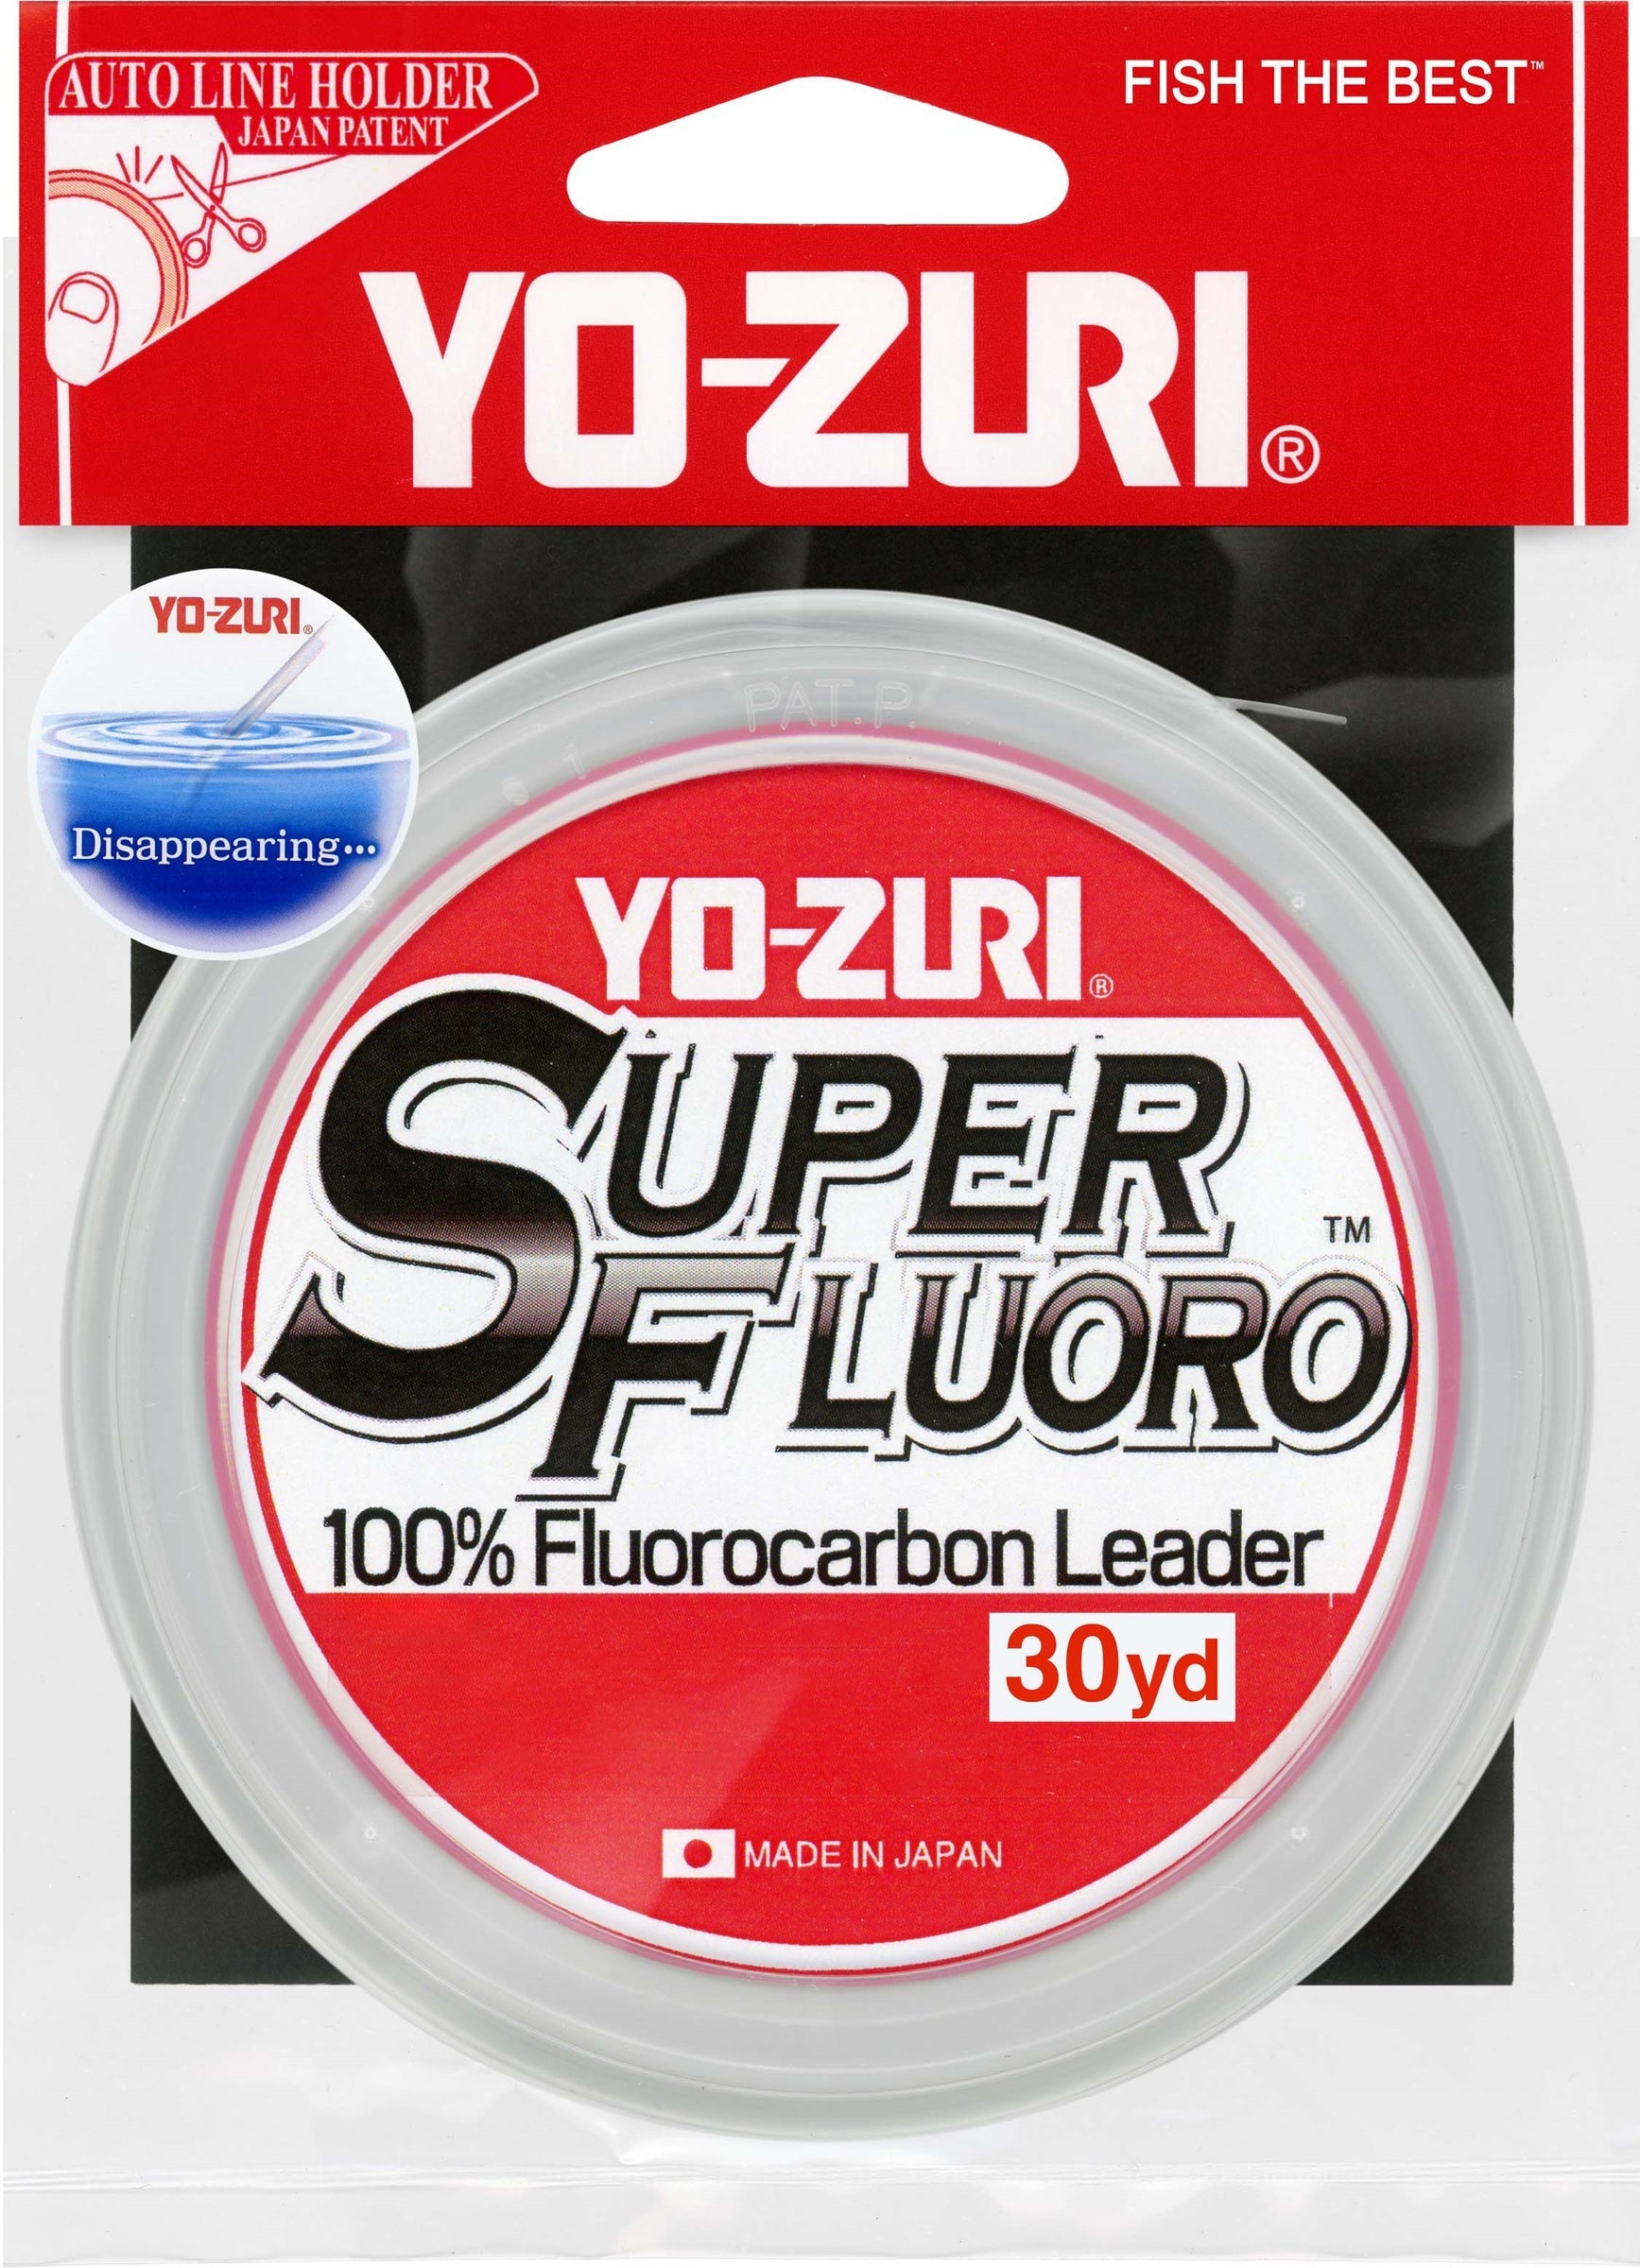 Yo-Zuri T7 Premium Fluorocarbon Fishing Line